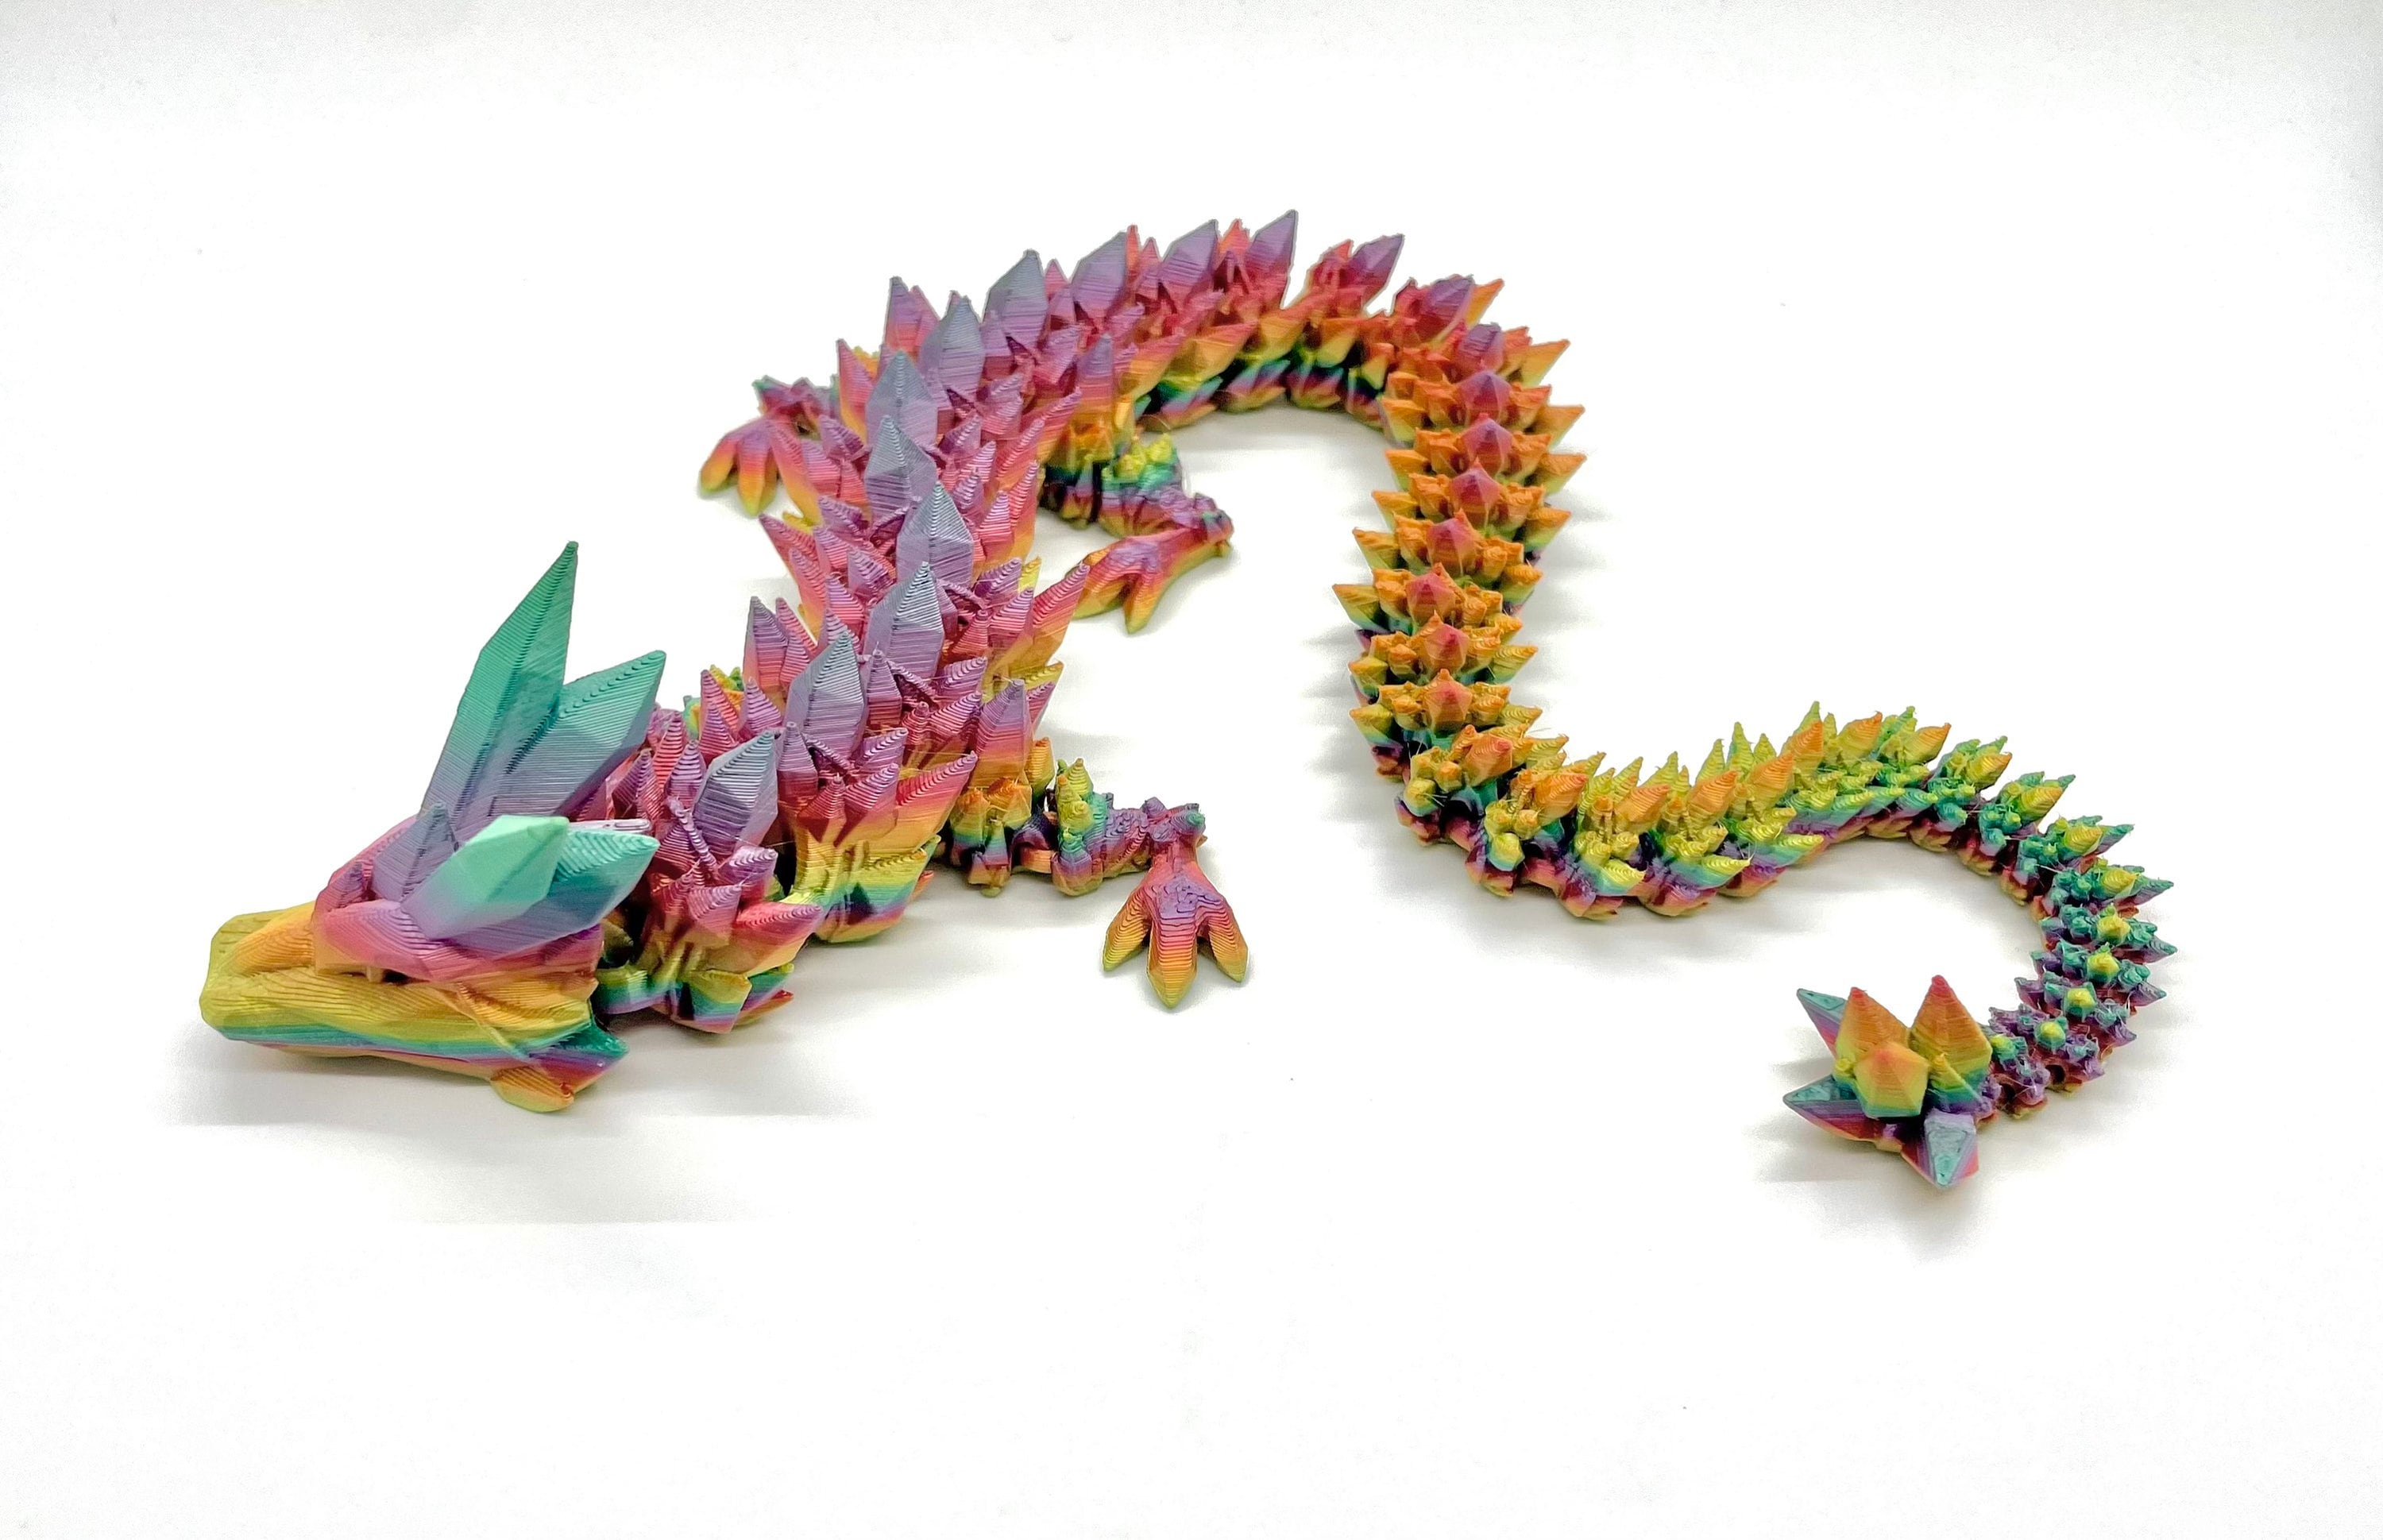  Shilkare 3D Printed Dragon Fidget Toy, Crystal Dragon